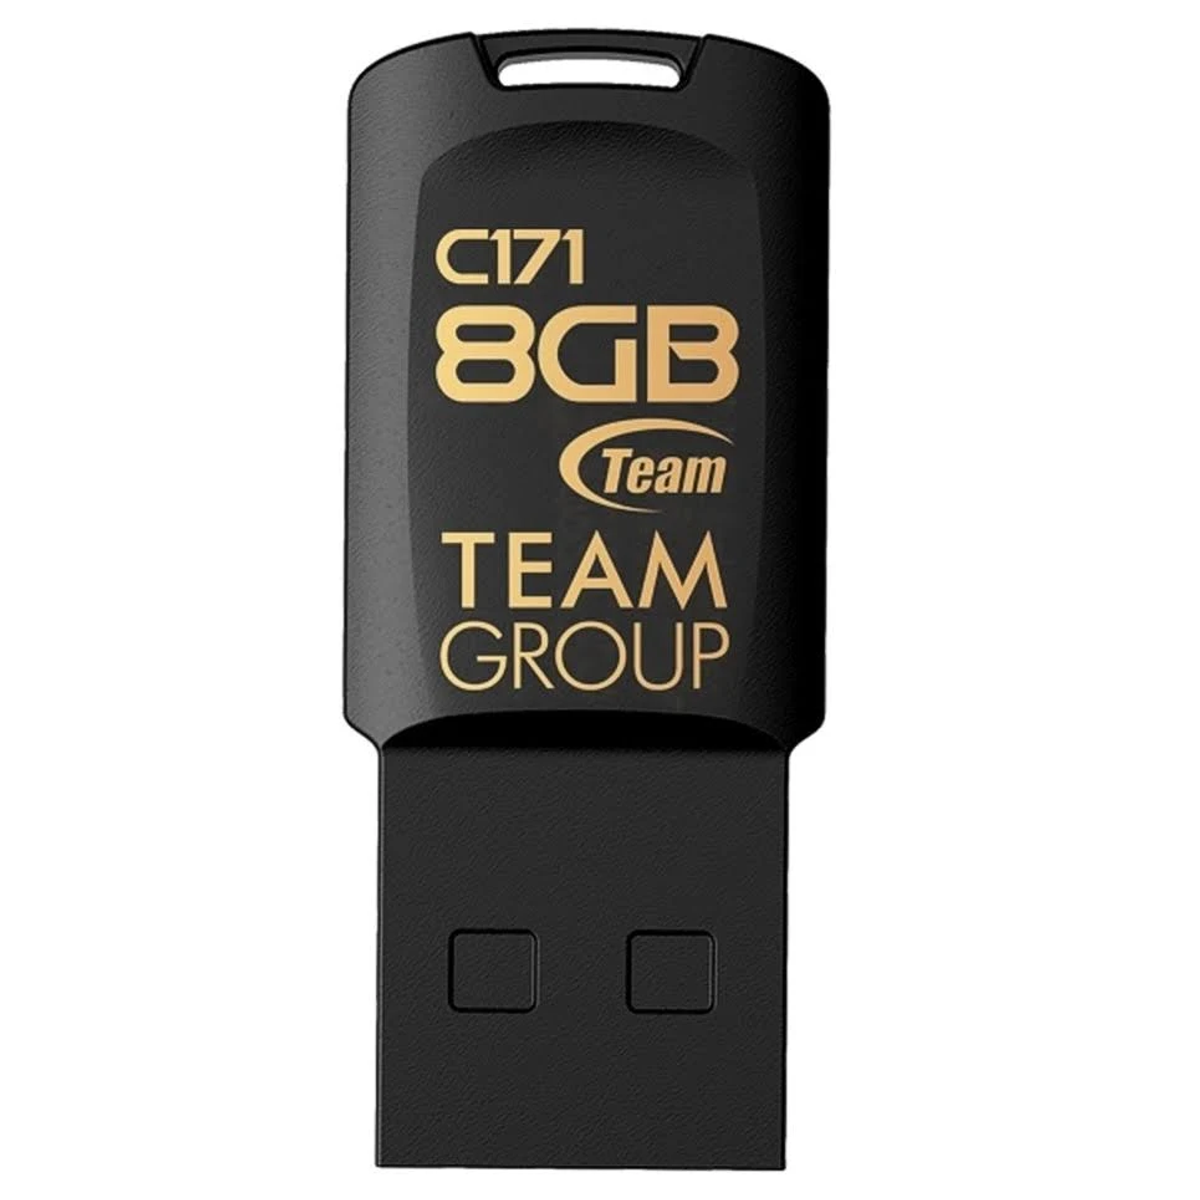 TC1718GB01 (Schwarz, GB) TEAM GROUP USB-Flash-Laufwerk 8